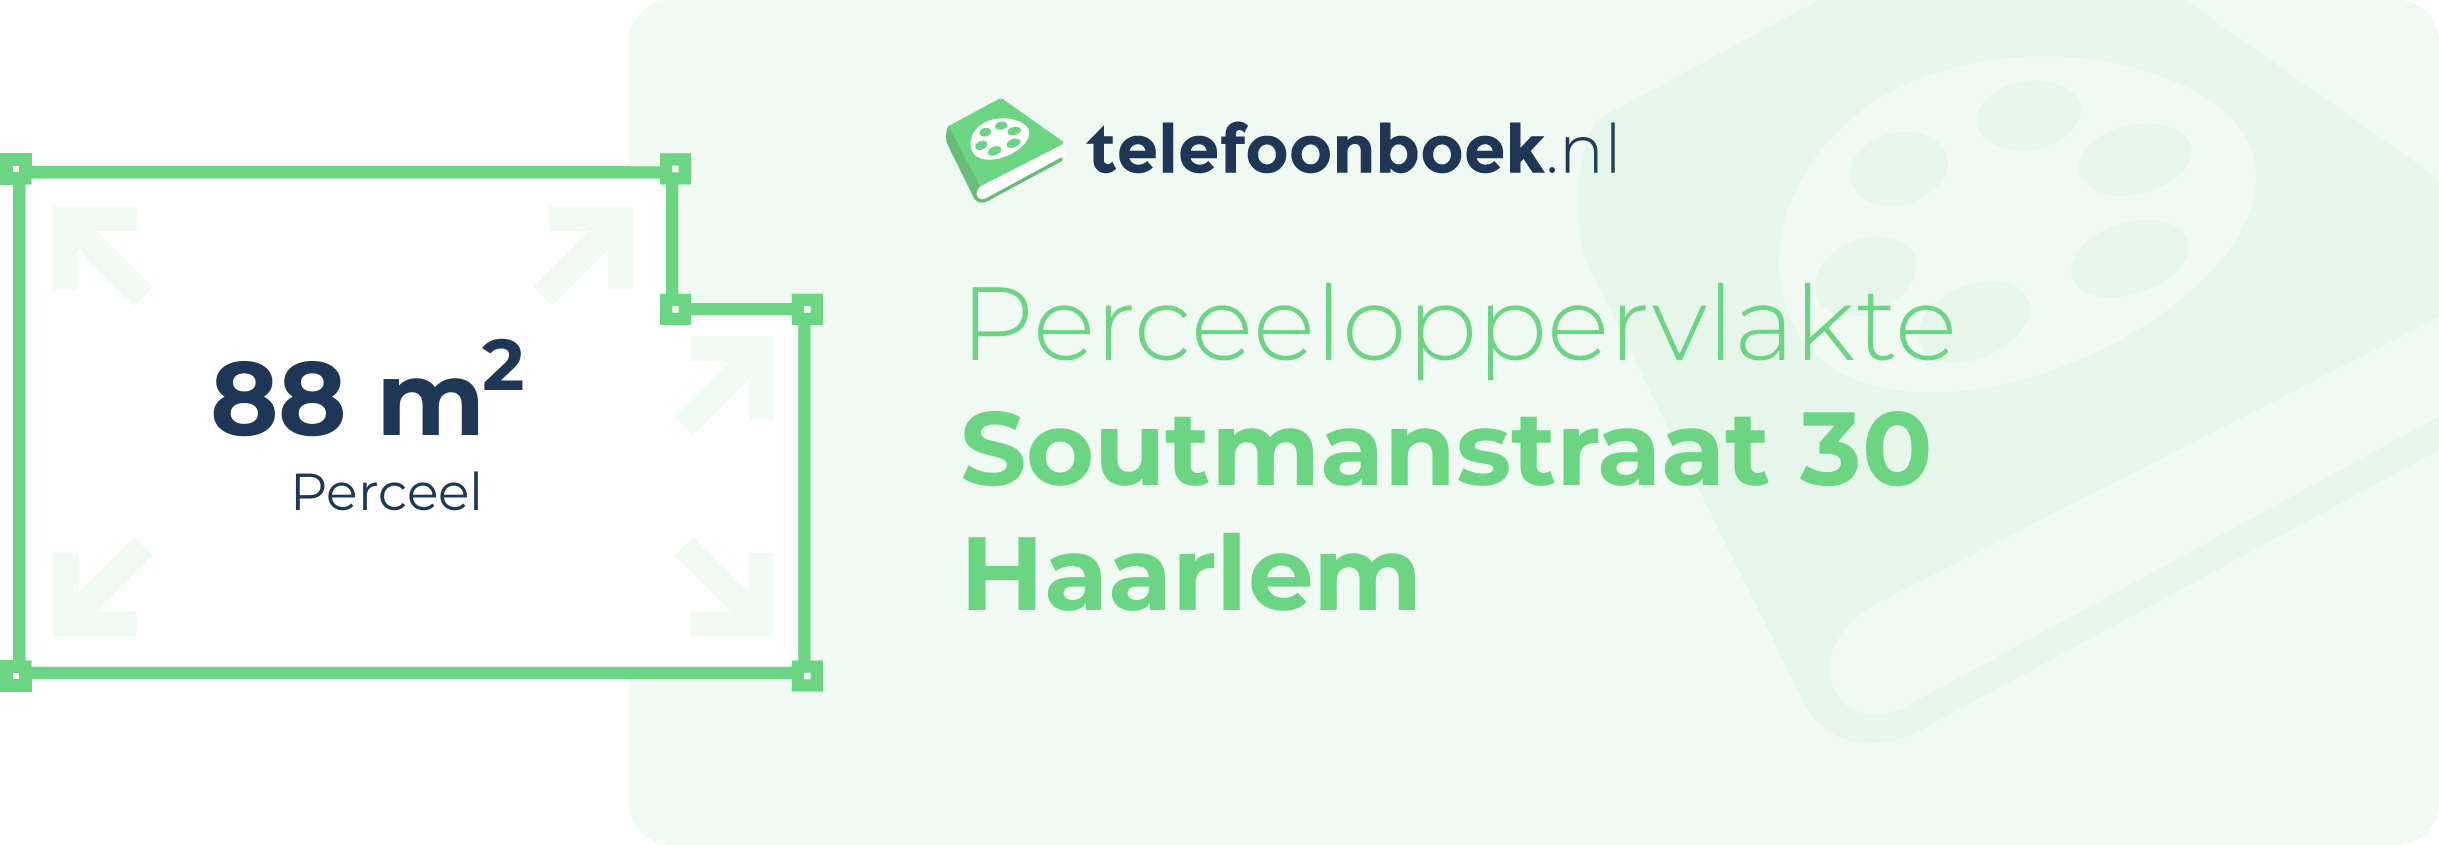 Perceeloppervlakte Soutmanstraat 30 Haarlem